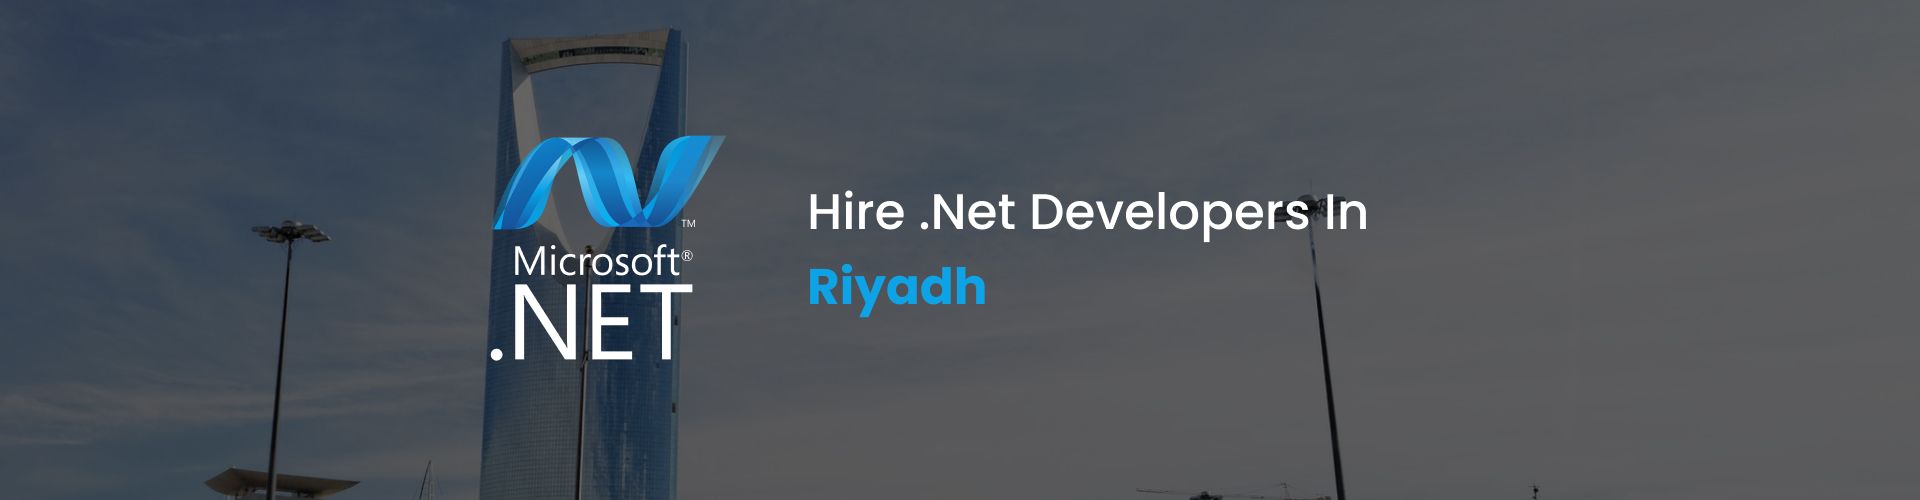 hire .net developers in riyadh